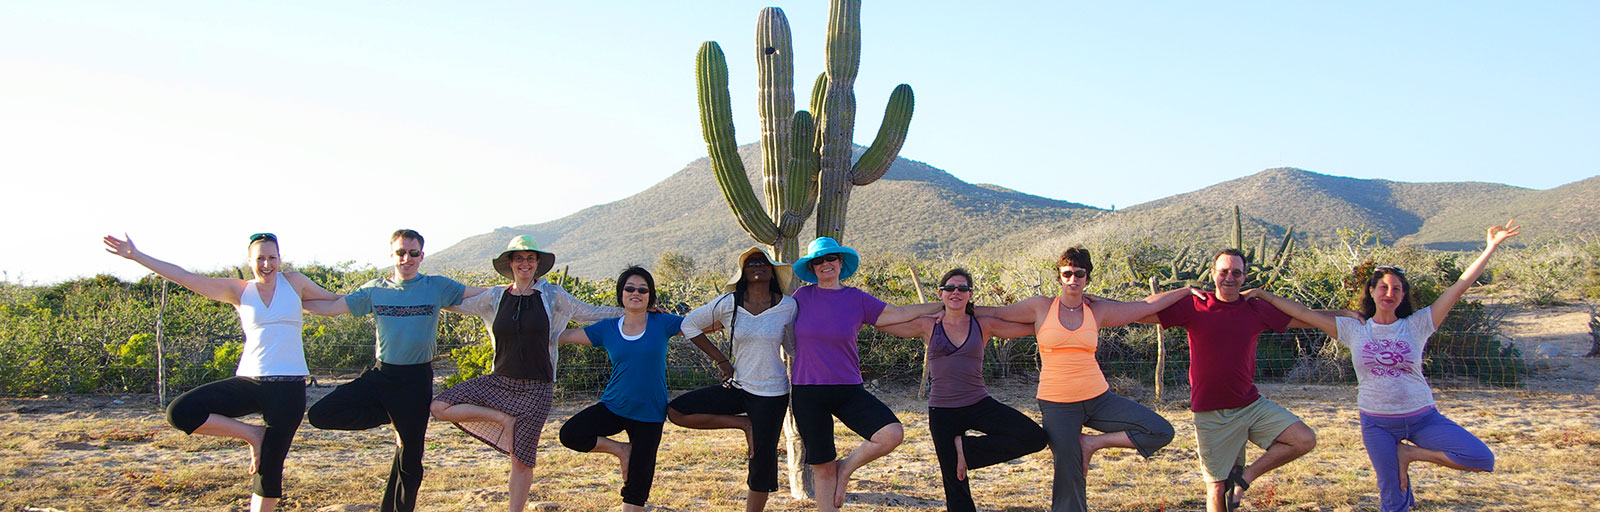 Mexico Yoga Retreat Reviews: Posing in the Desert